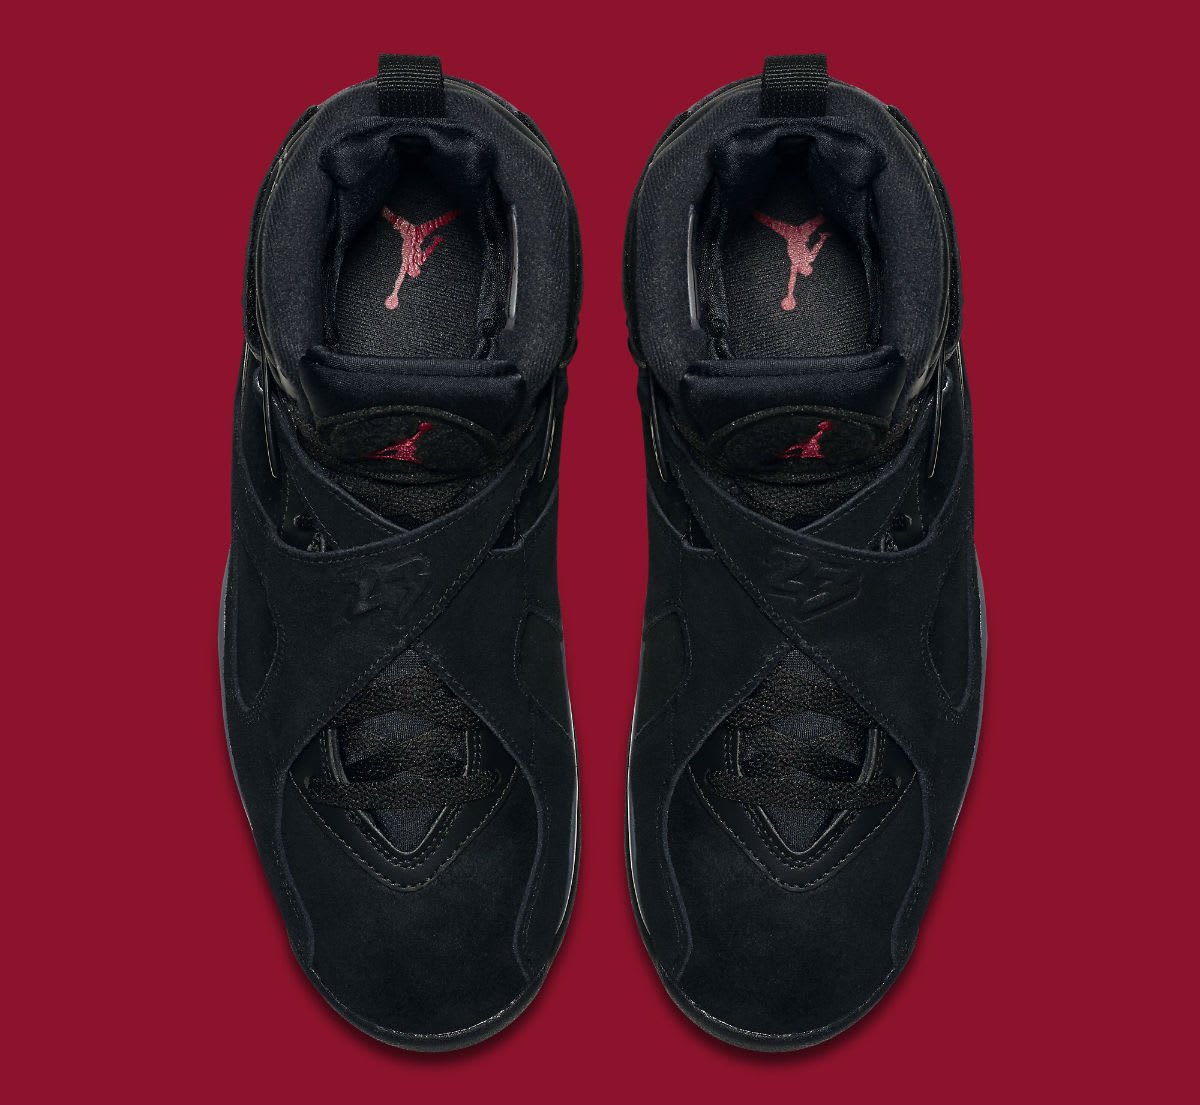 Air Jordan 8 Bred Black Gym Red Wolf Grey Release Date Top 305381-022